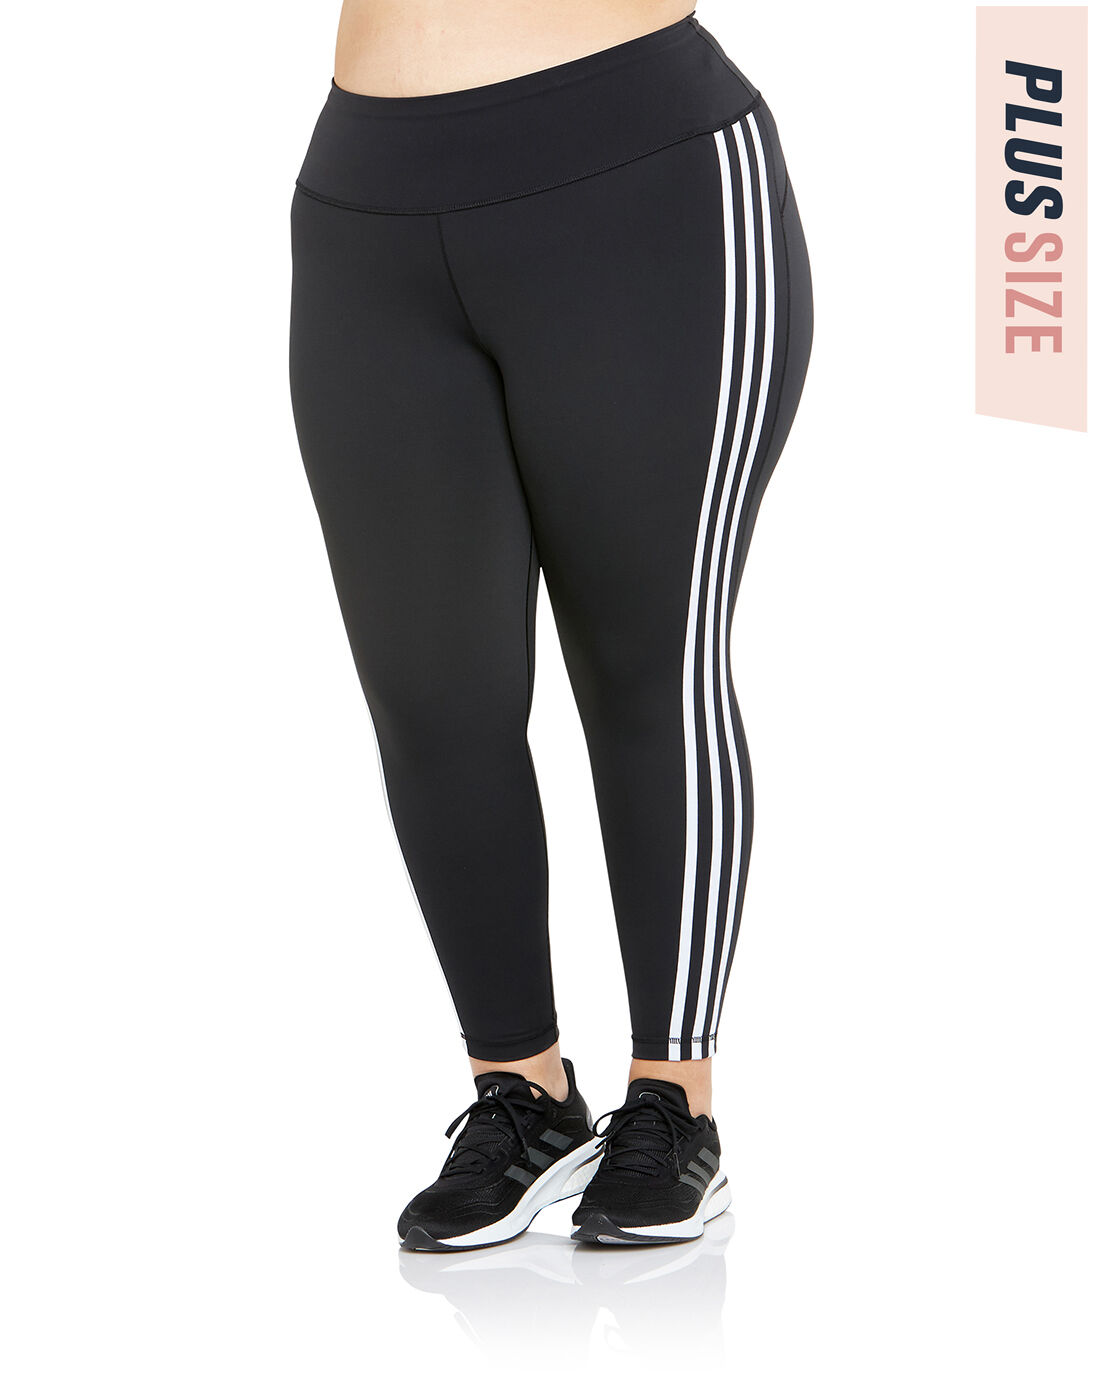 Life Style Fitforhealth Sports UK | negozio adidas milano via tocqueville -  Stripe Plus Leggings - adidas Womens Believe This 3 - Black